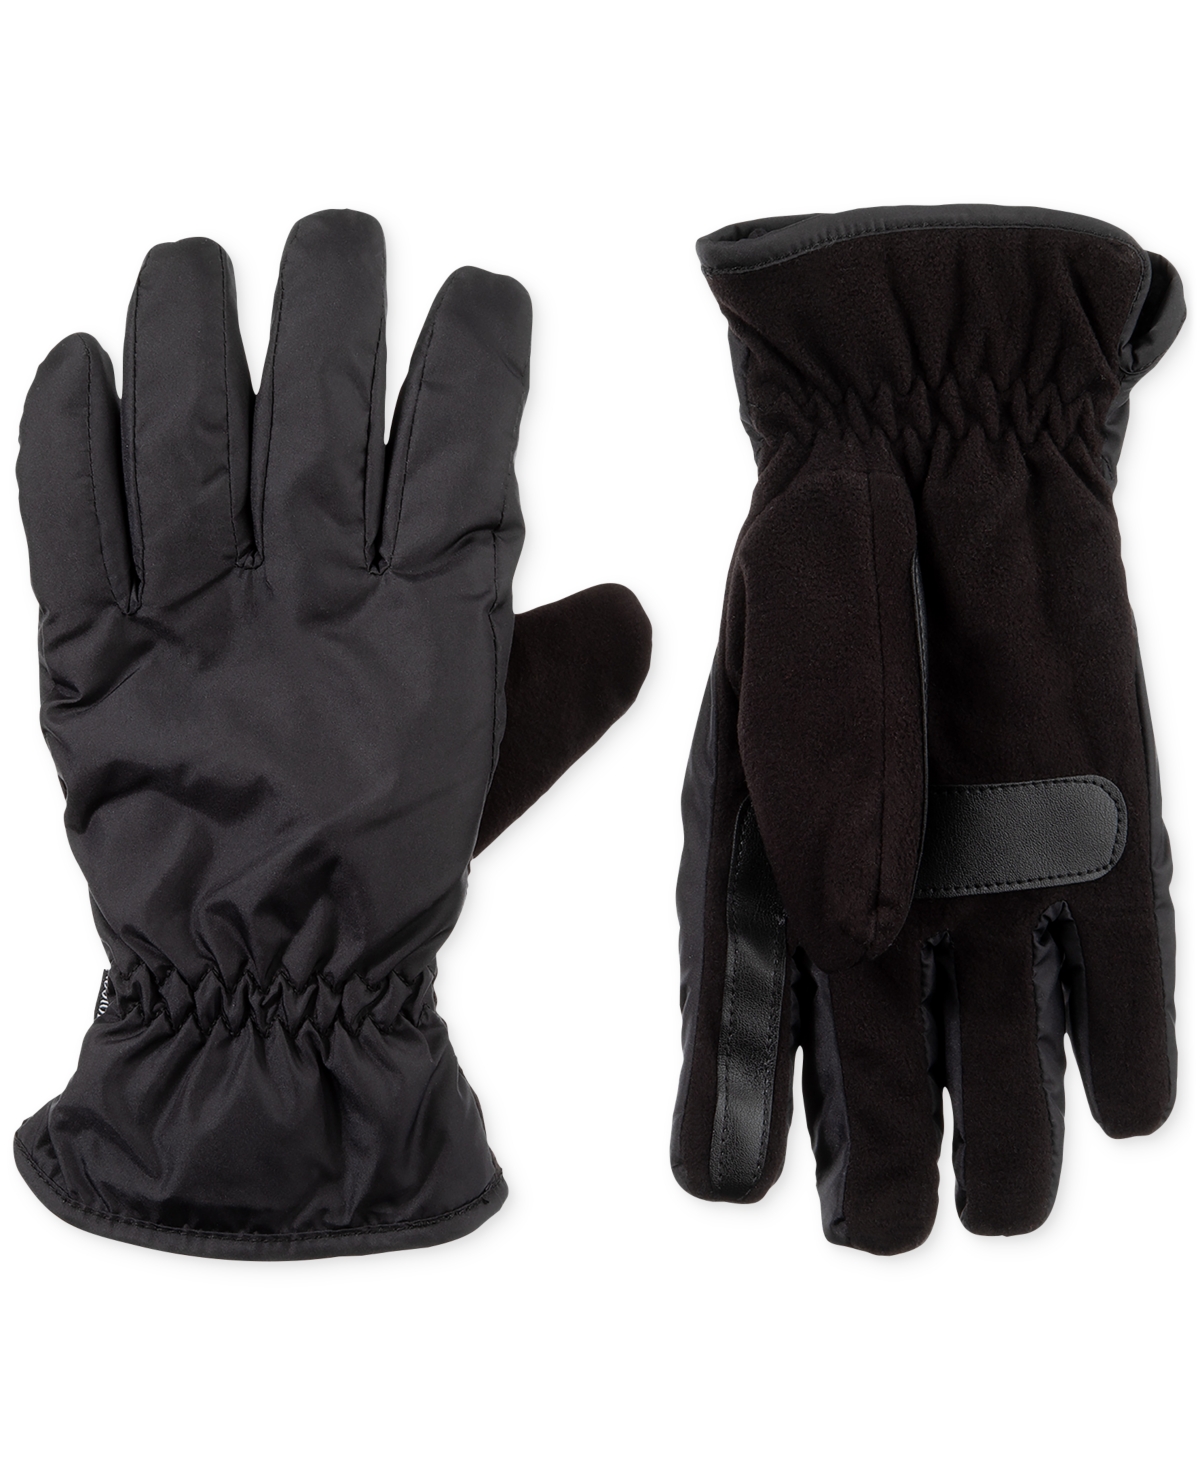 Men's Insulated Water-Repellent Active Gloves - Black